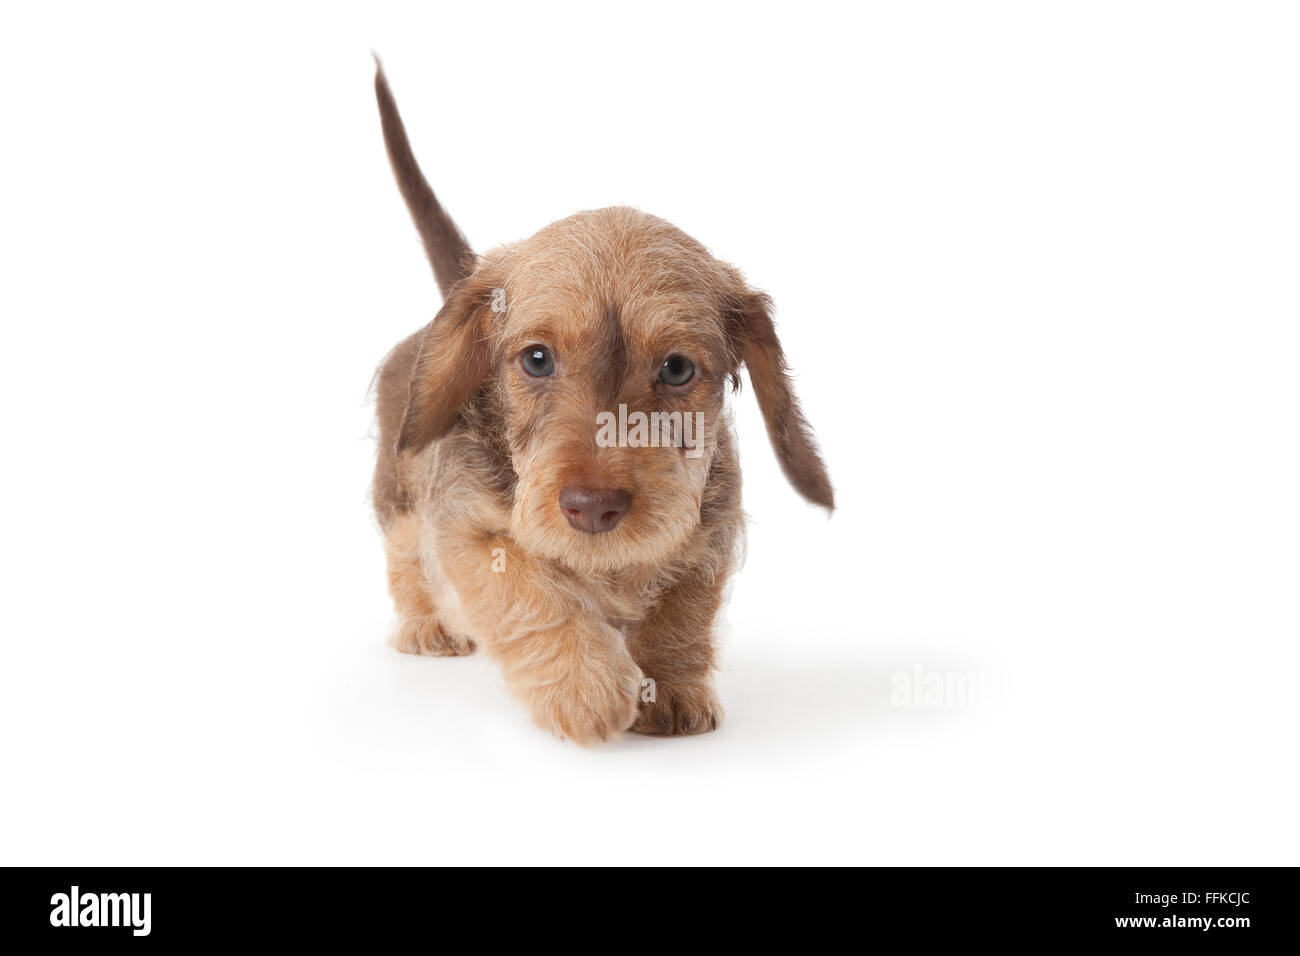 Walking wire-haired dachshund puppy on white background Stock Photo